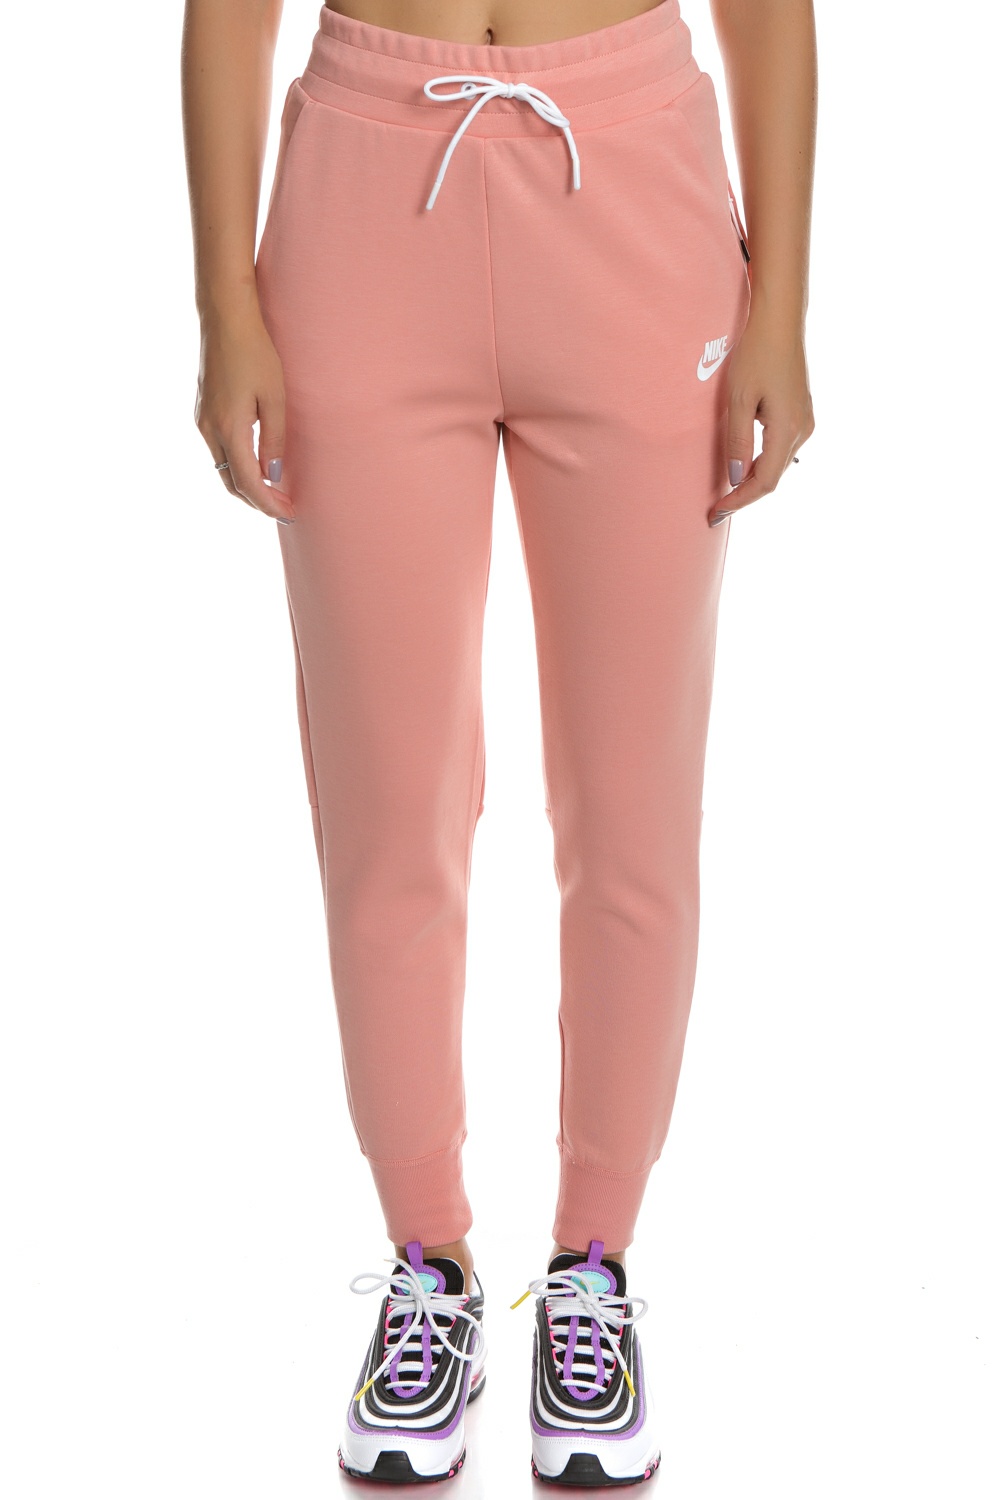 NIKE - Γυναικείο παντελόνι φόρμας NIKE NSW TCH FLC ροζ Γυναικεία/Ρούχα/Αθλητικά/Φόρμες